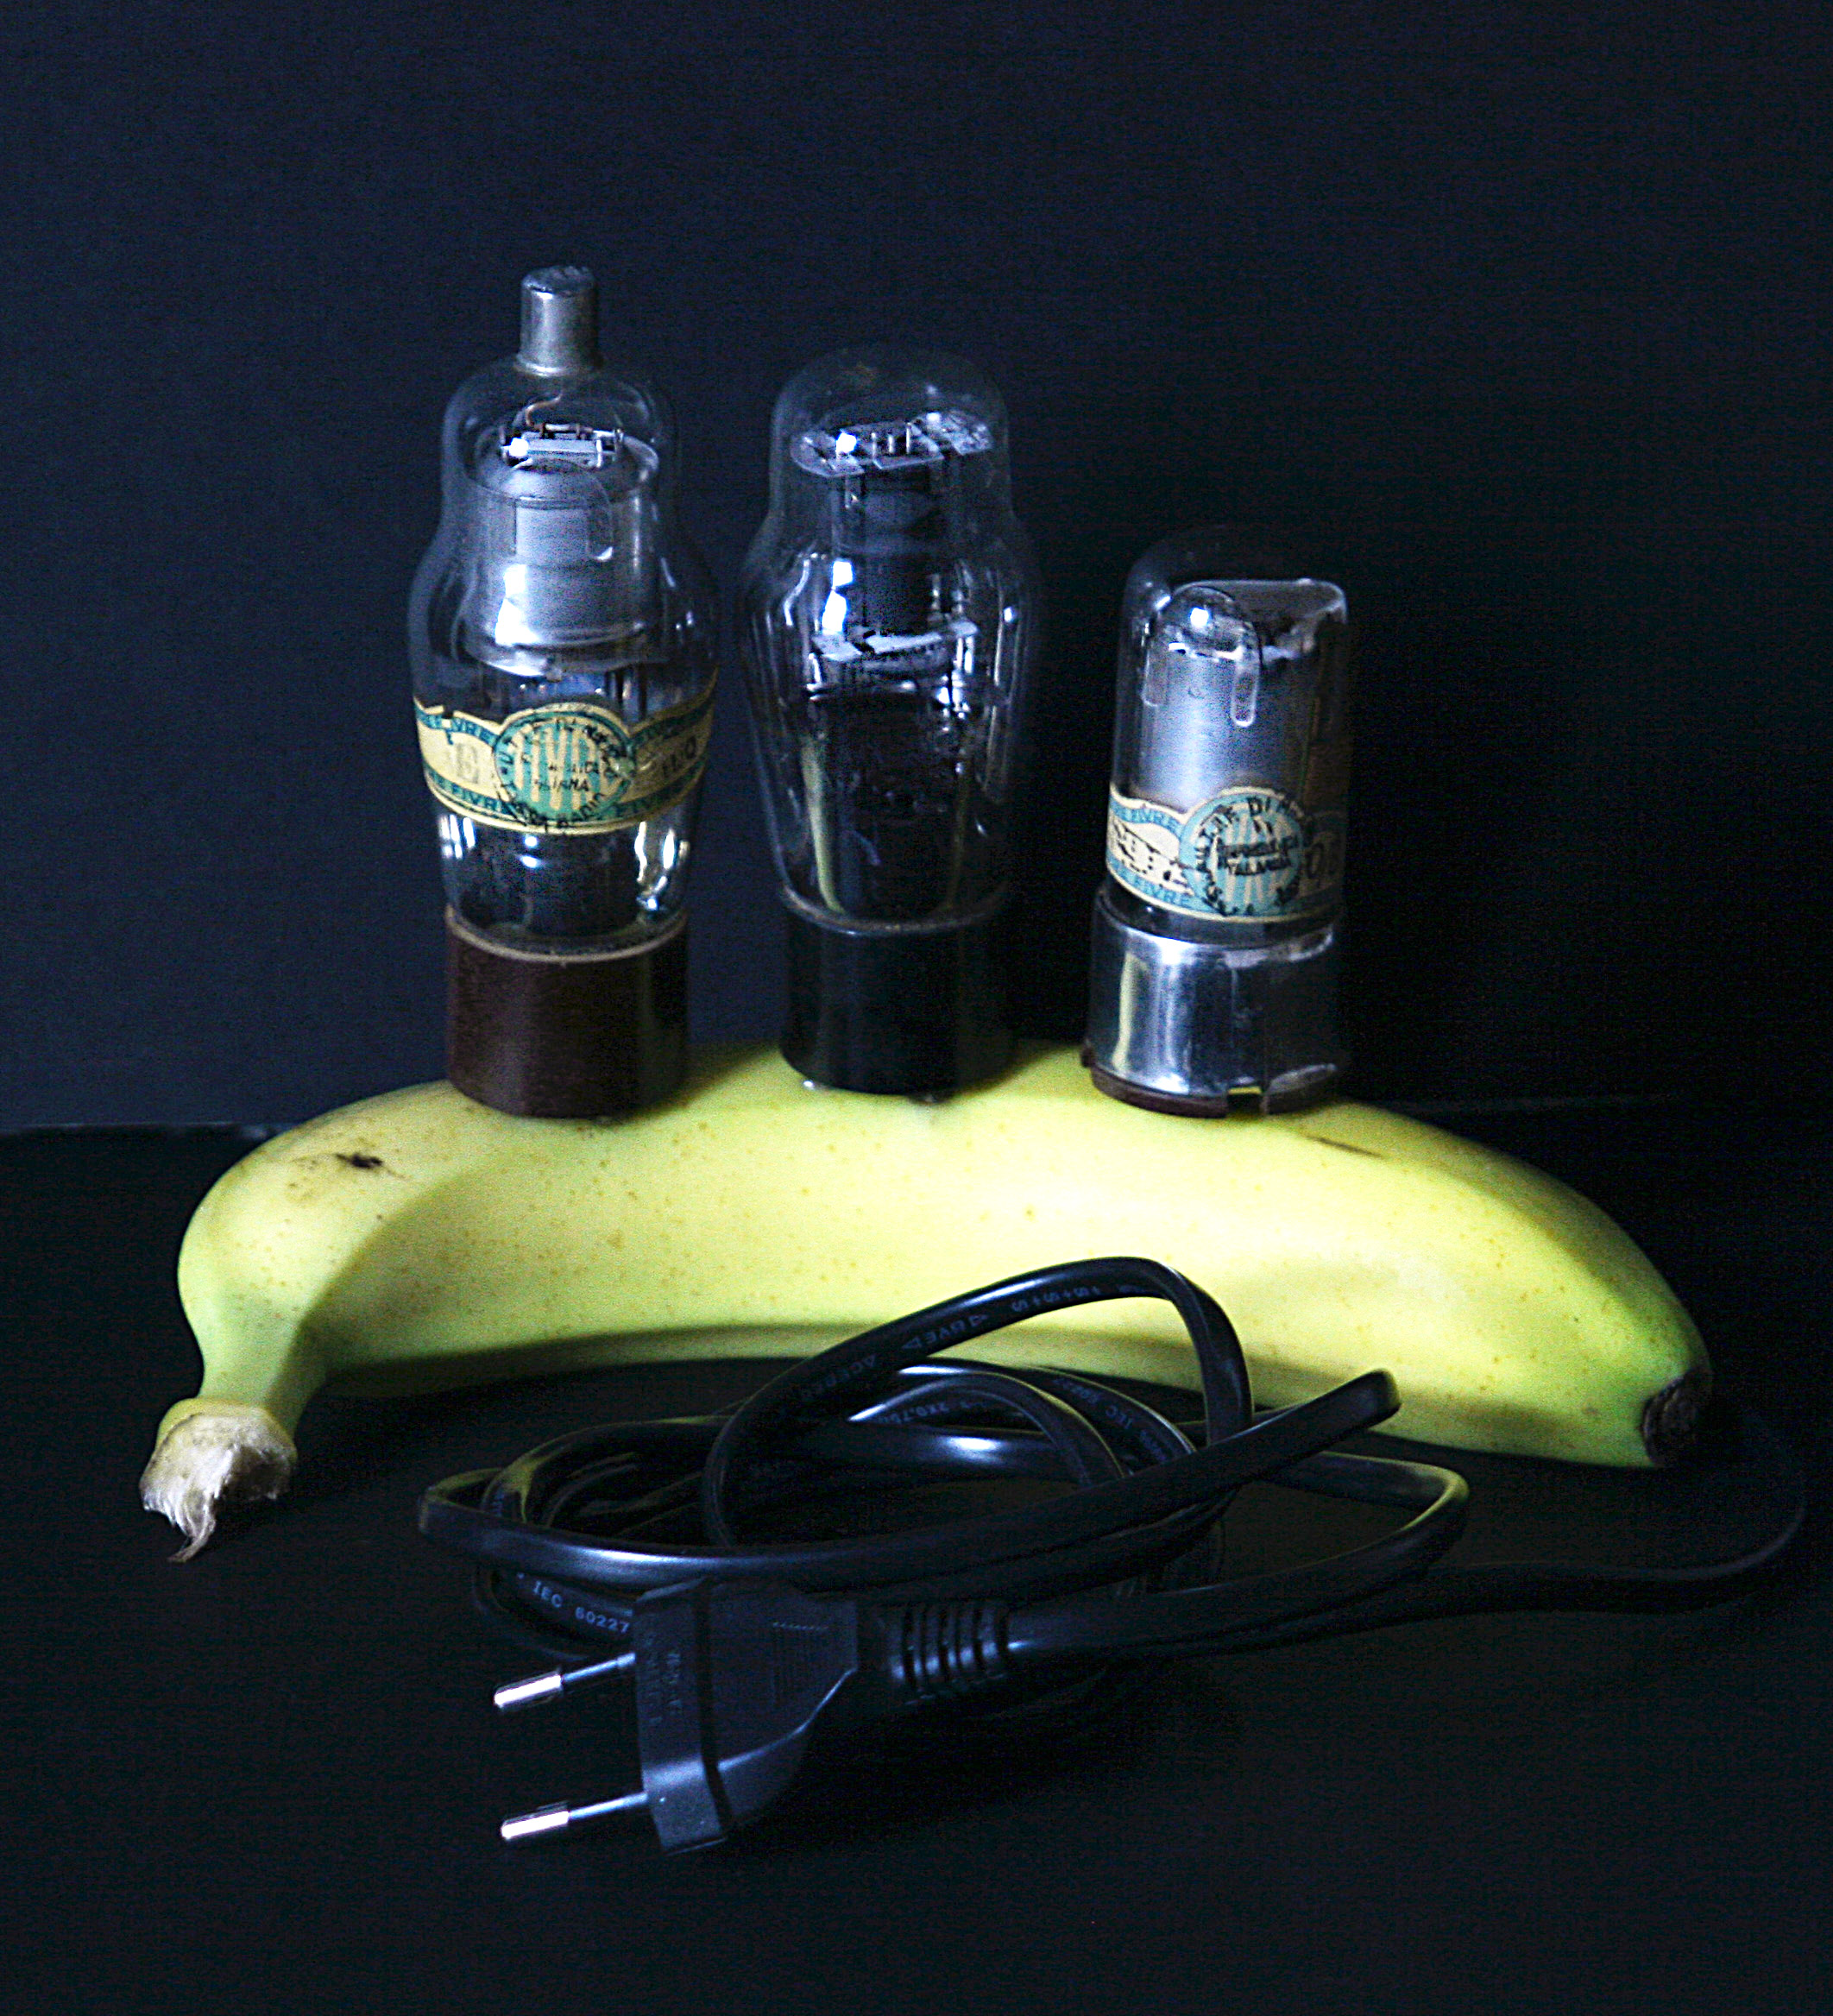 Electric banana